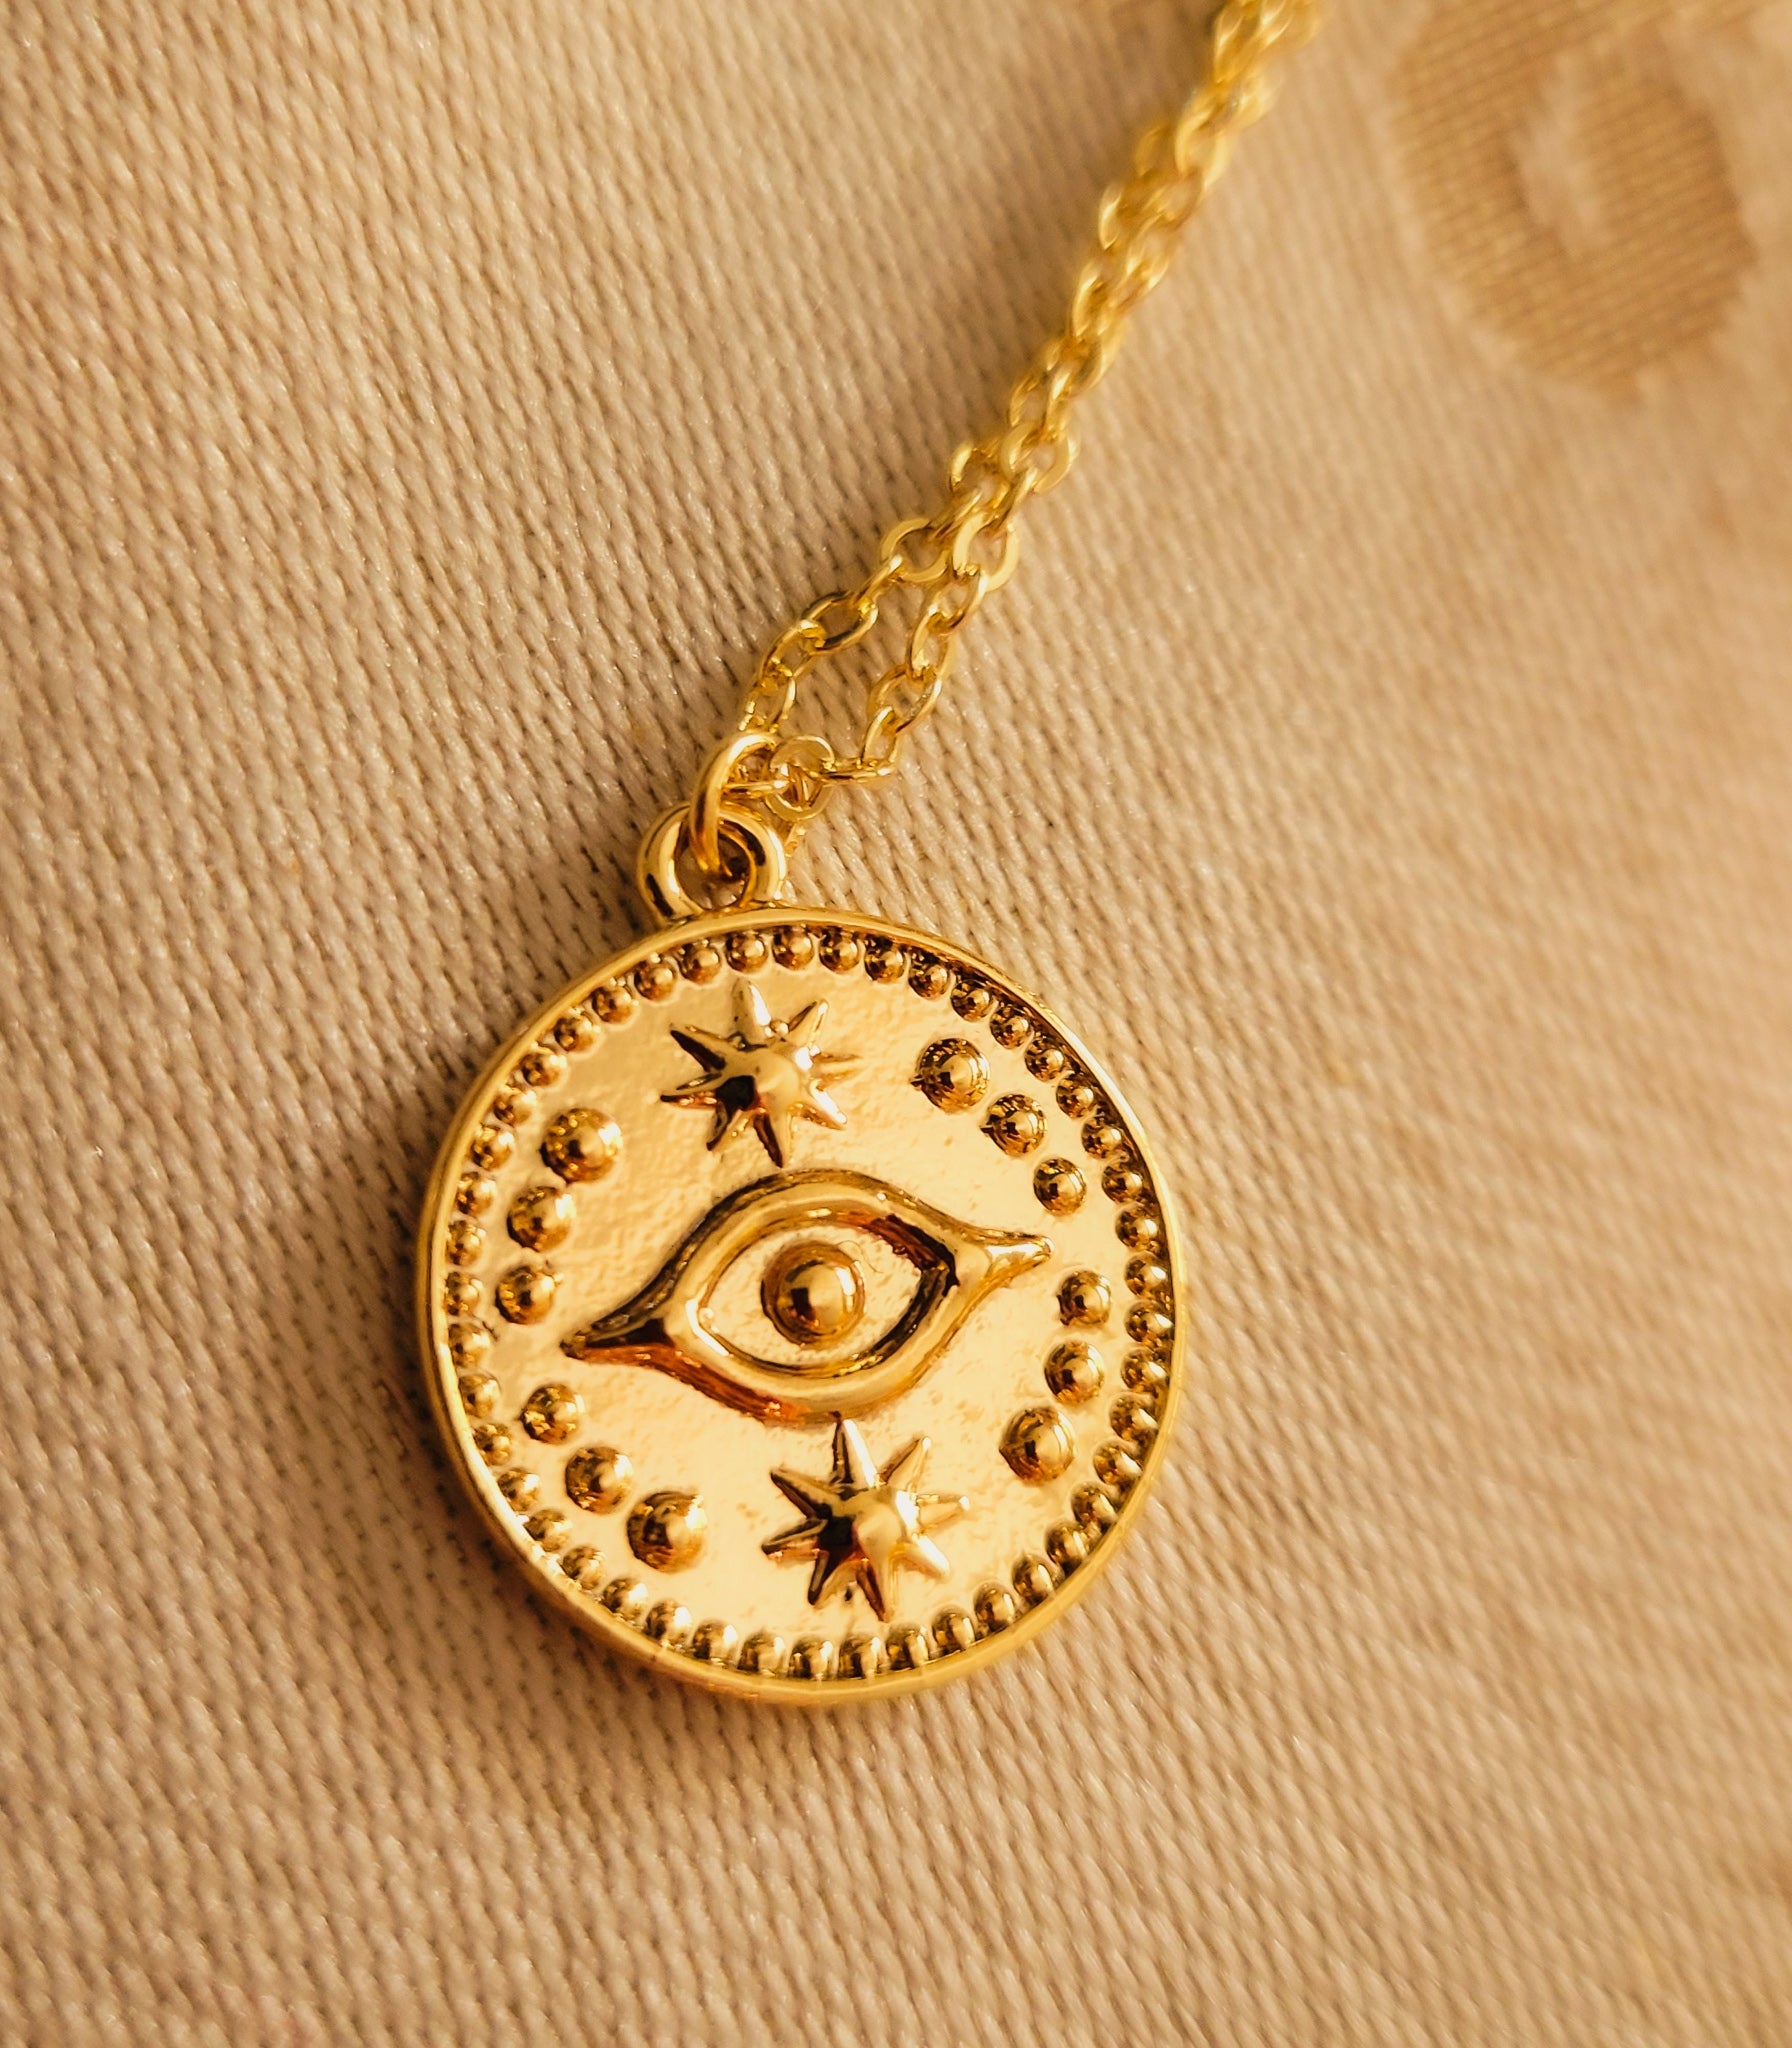 Magic eye pendant necklace